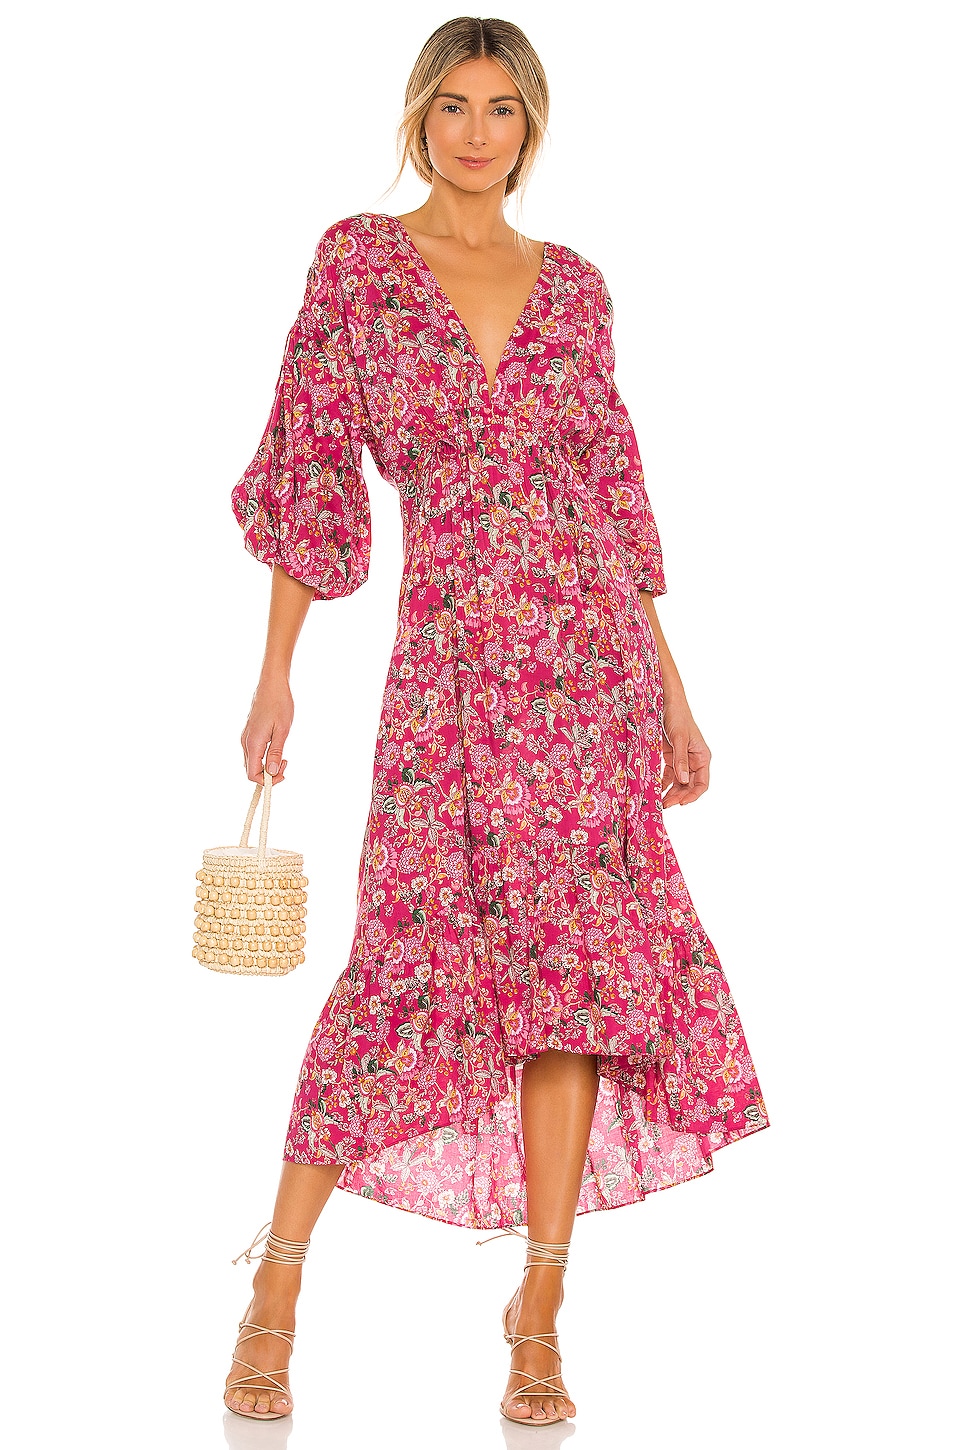 MISA Los Angeles Johanna Dress in Pink Falaise Floral | REVOLVE